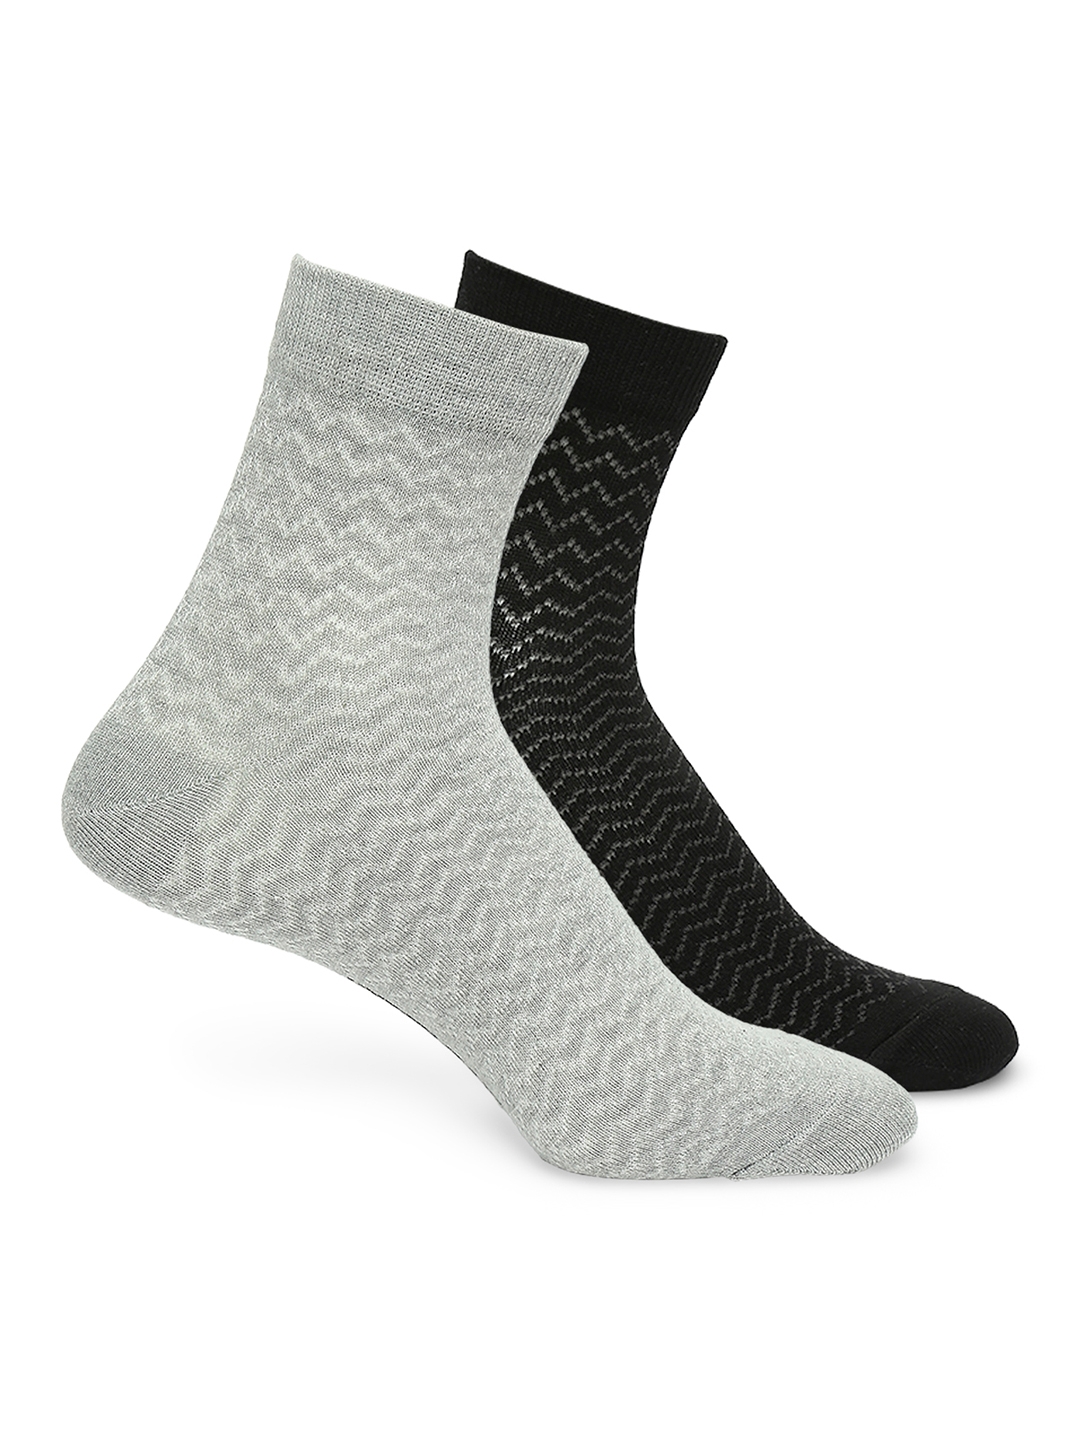 spykar | Underjeans by Spykar Premium Black & Grey Melange Ankle Length Socks - Pack Of 2 0